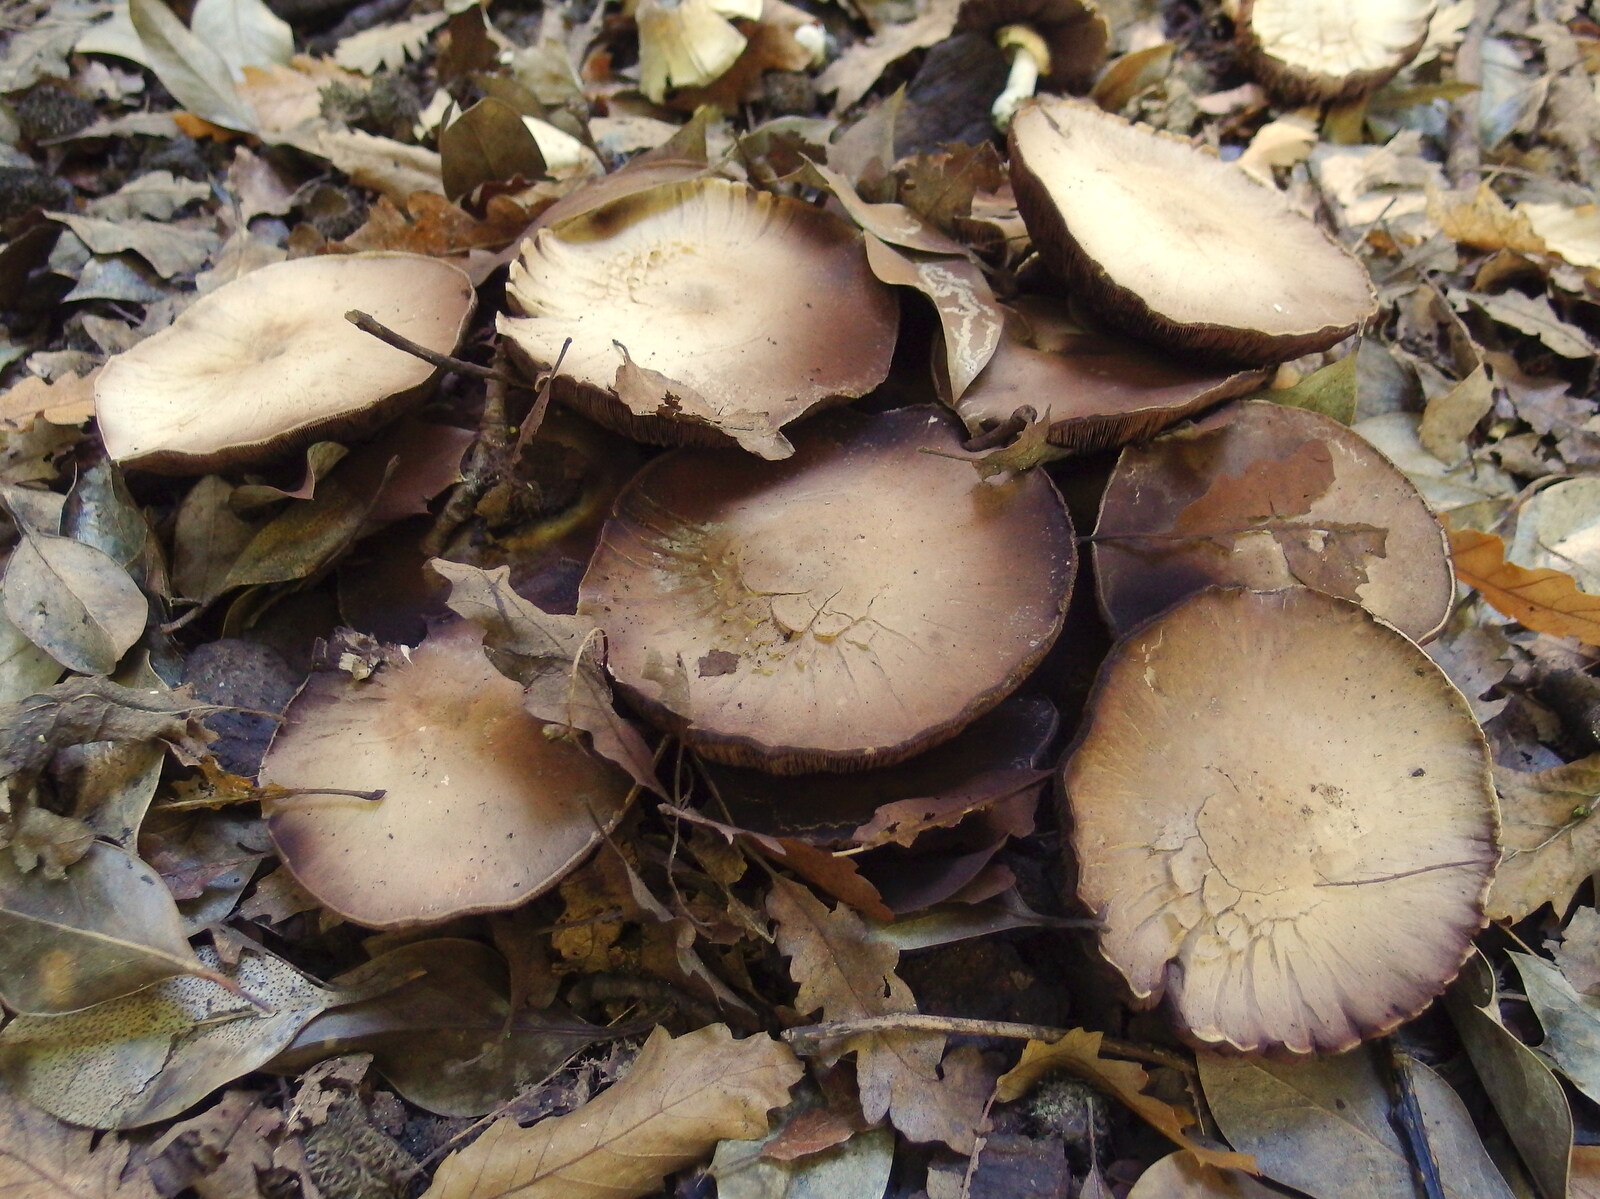 Funky mushrooms from A Walk Around Thornham, and Jacqui Dankworth, Bungay, Suffolk - 6th October 2013